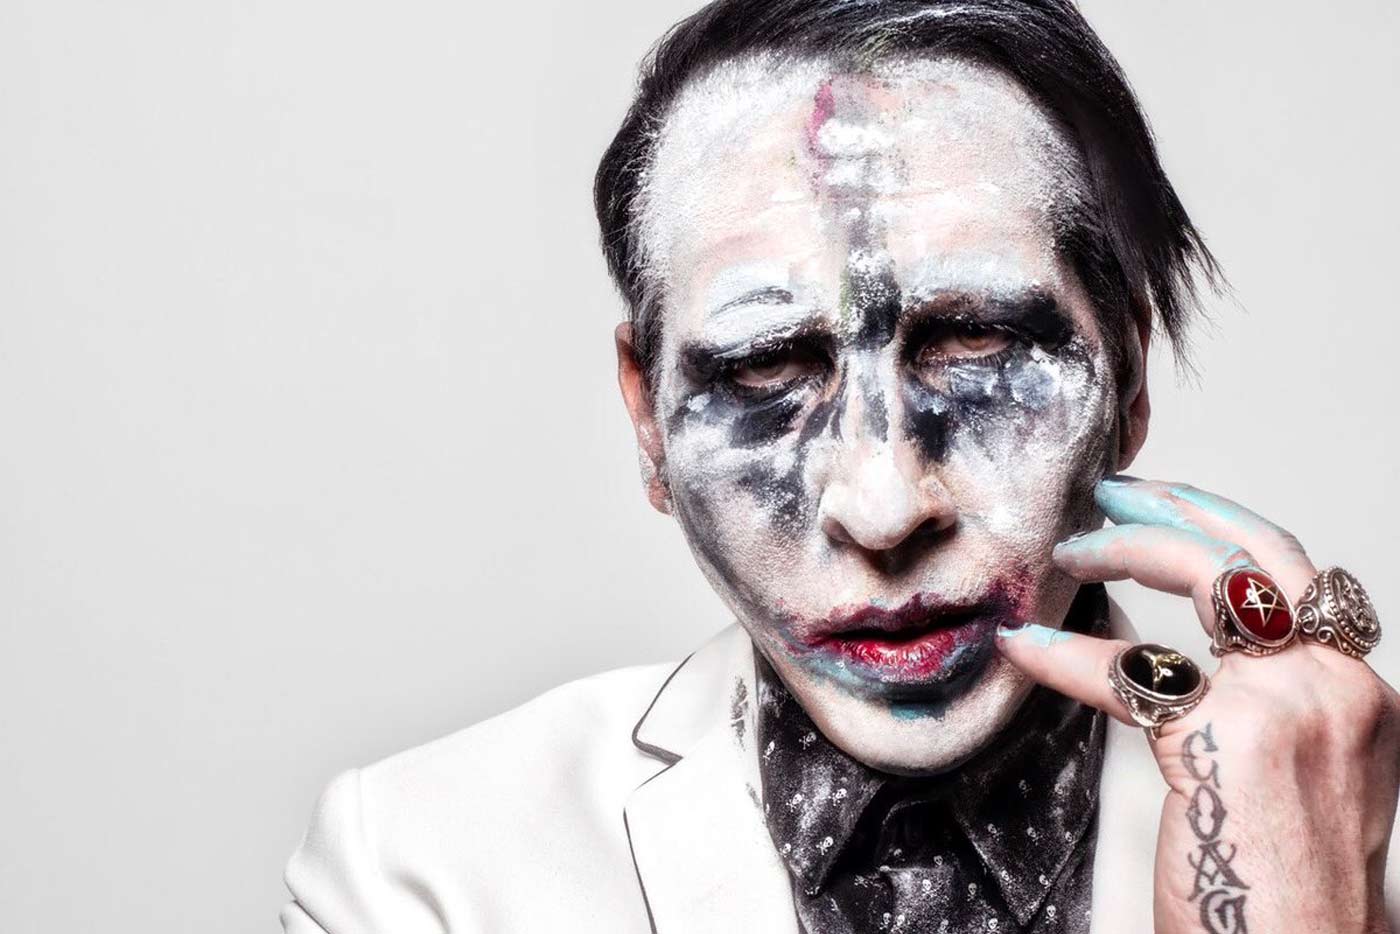 Esmé Bianco (Juego de Tronos) se suma a denunciar a Marilyn Manson